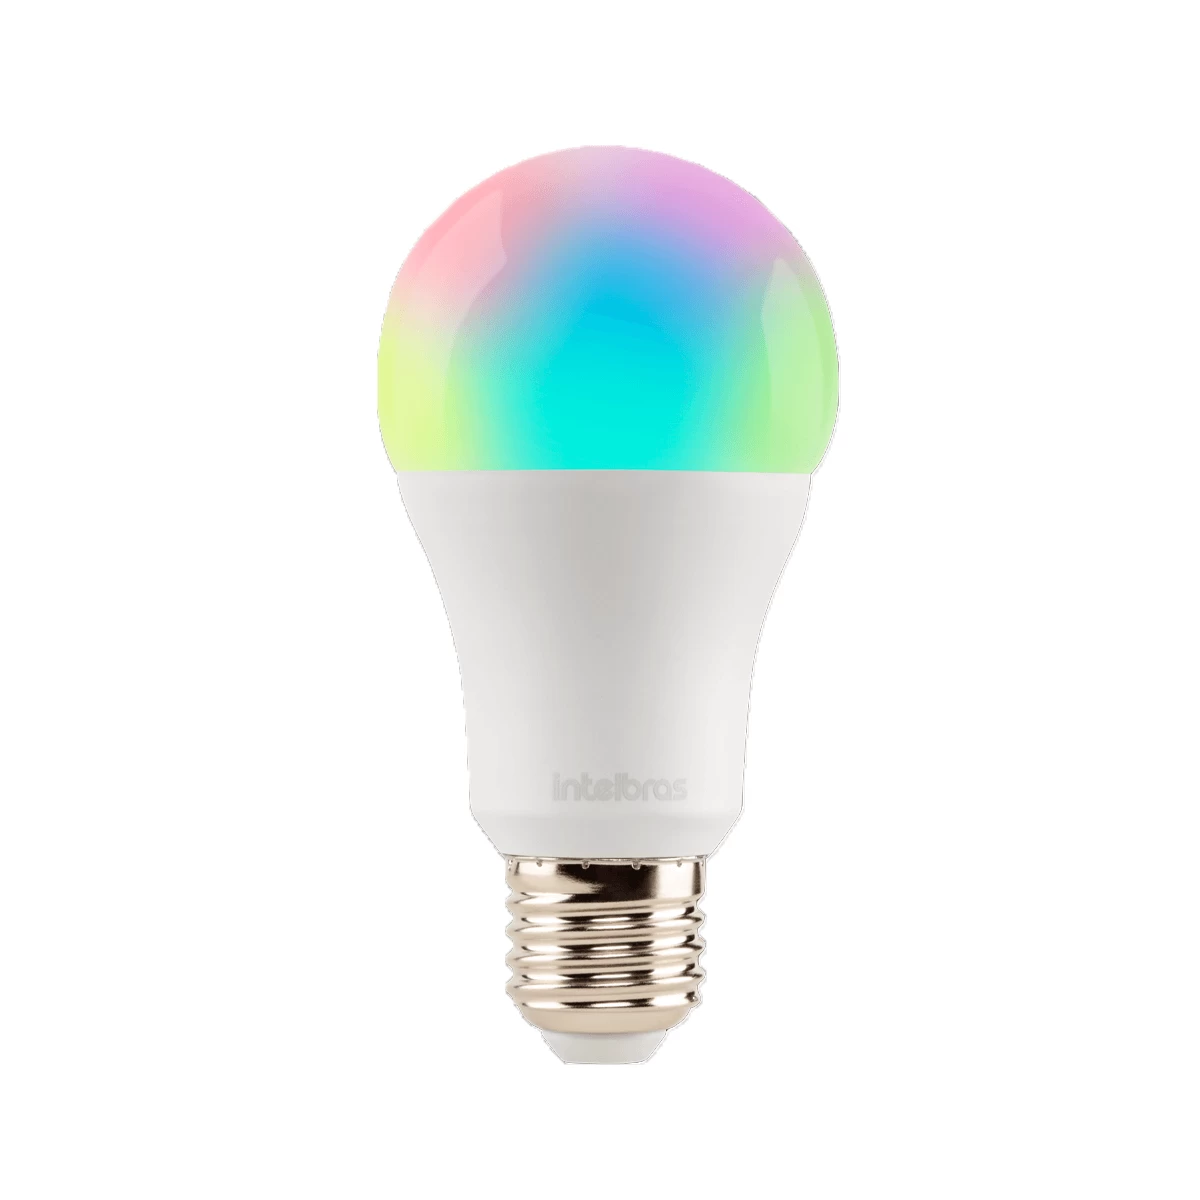 LAMPADA LED WI FI SMART EWS 407 IZY<br/>